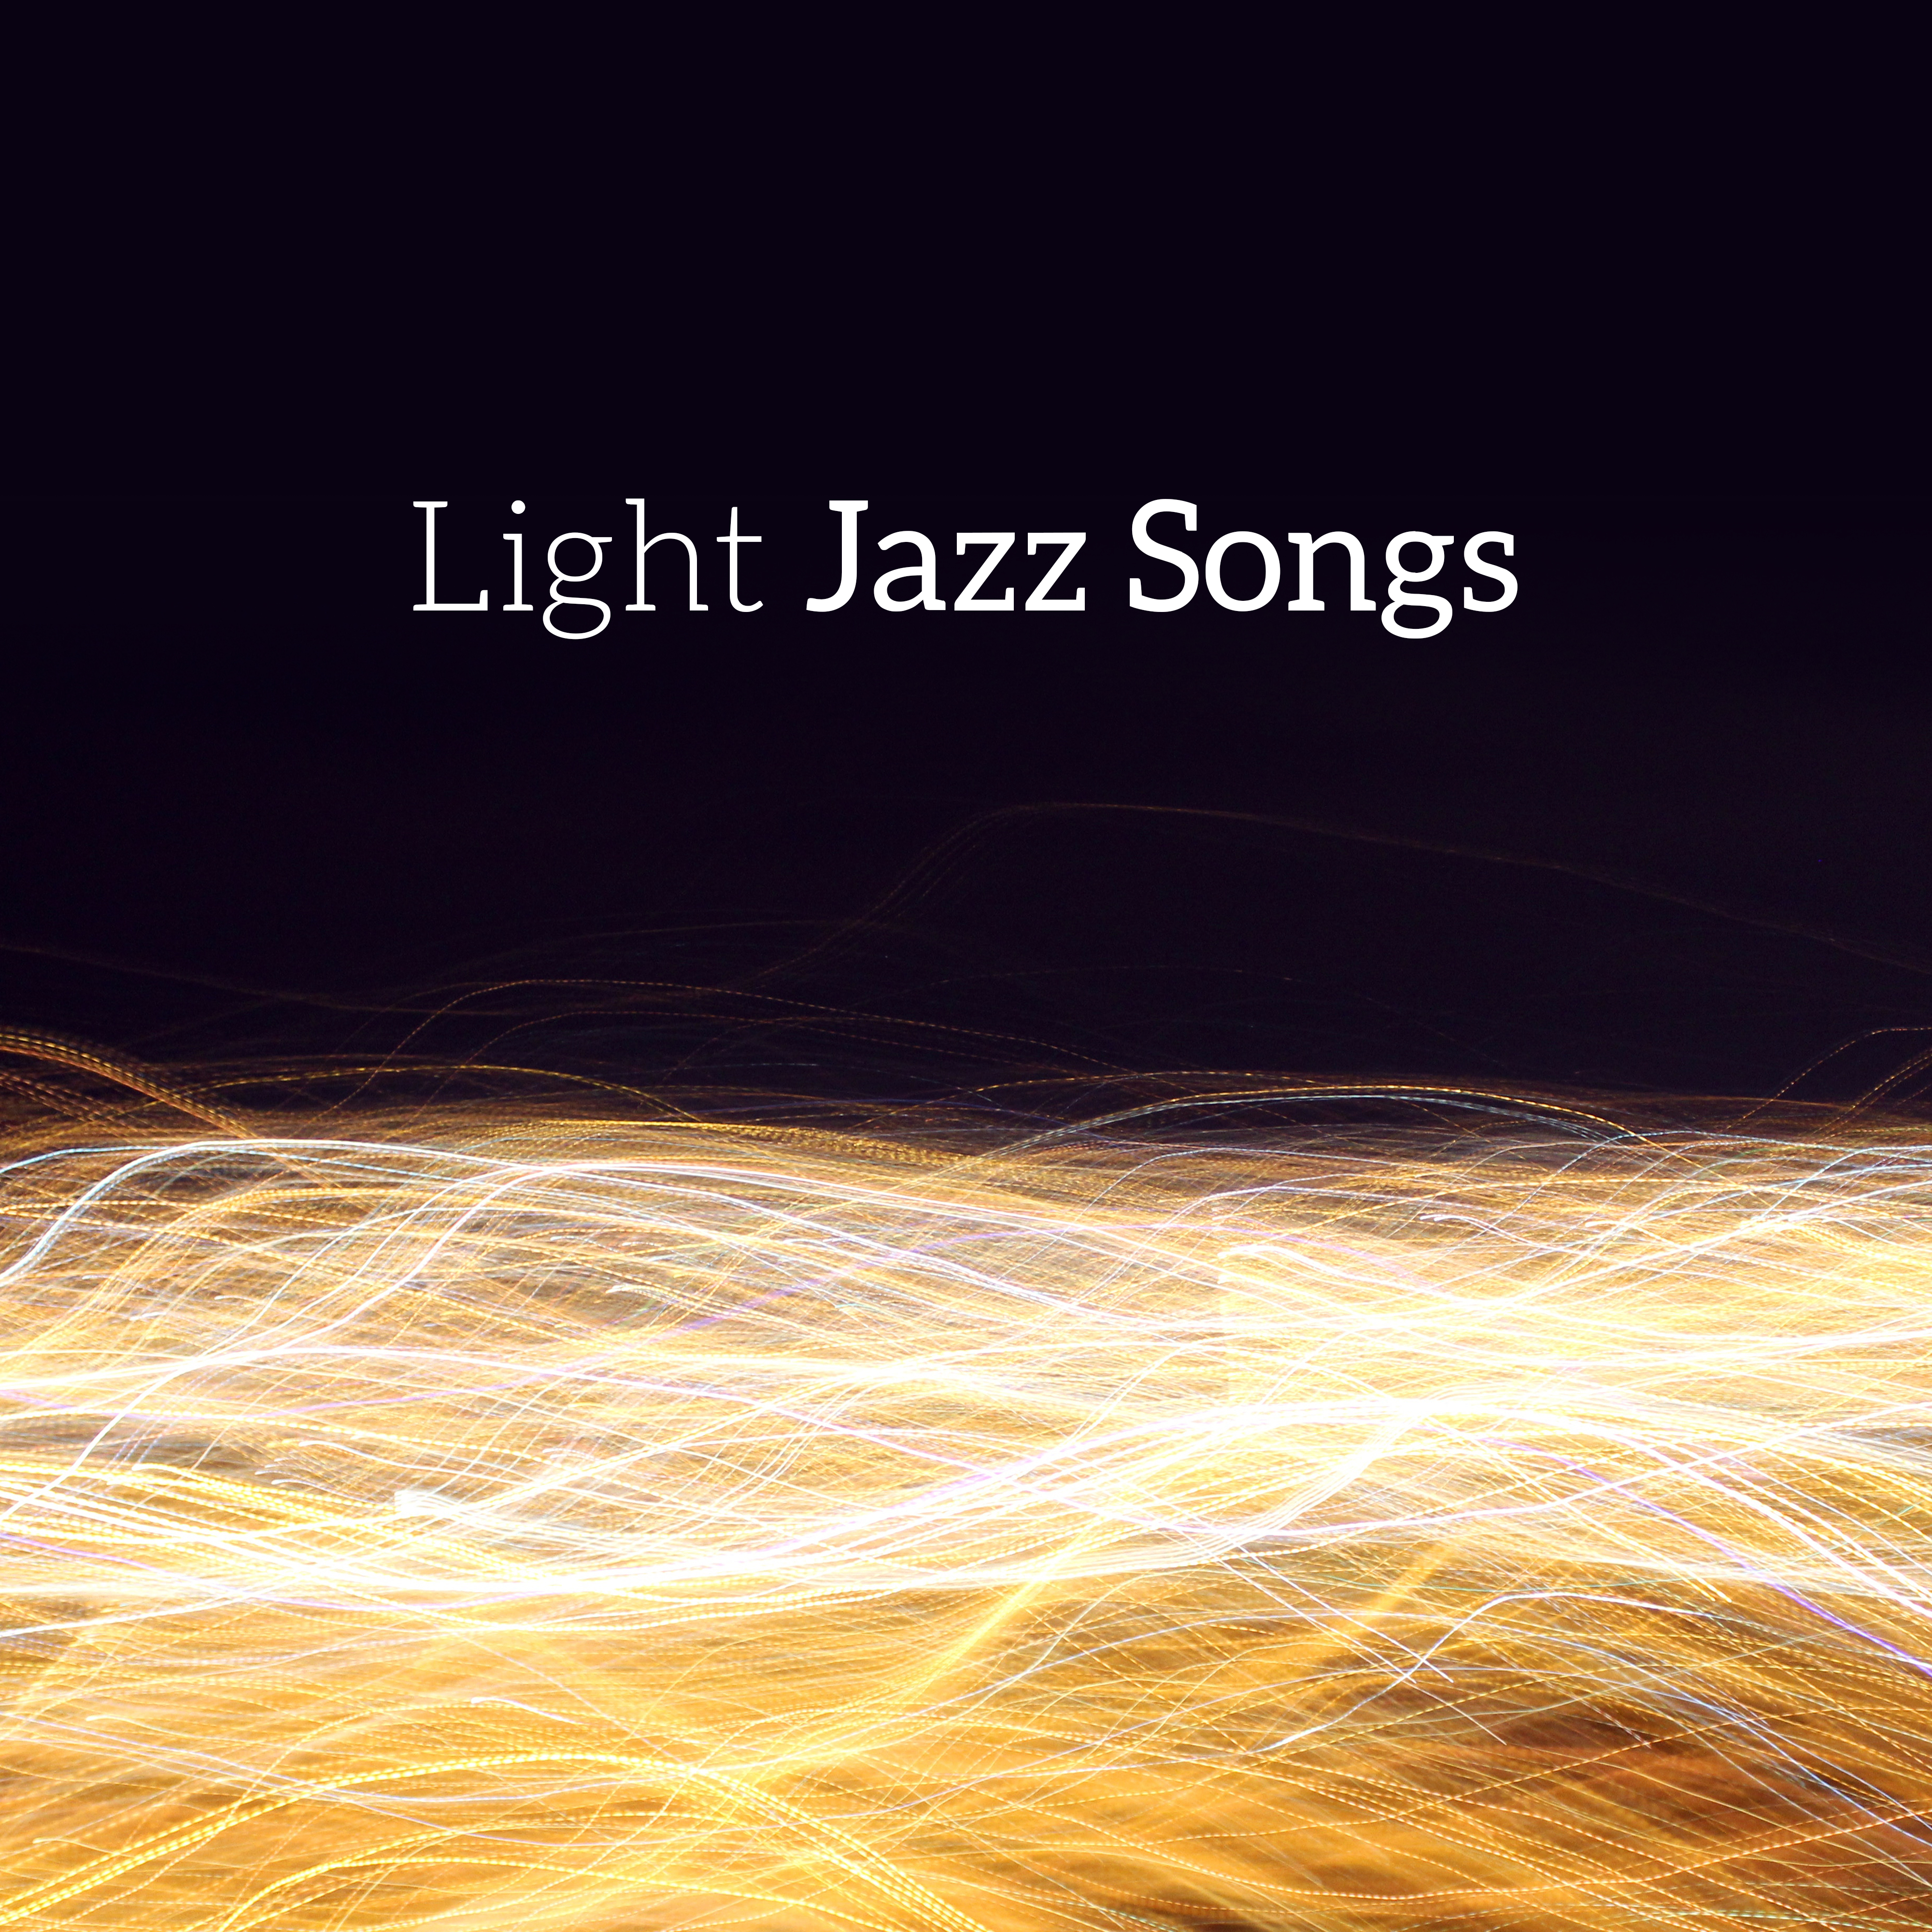 Light Jazz Songs